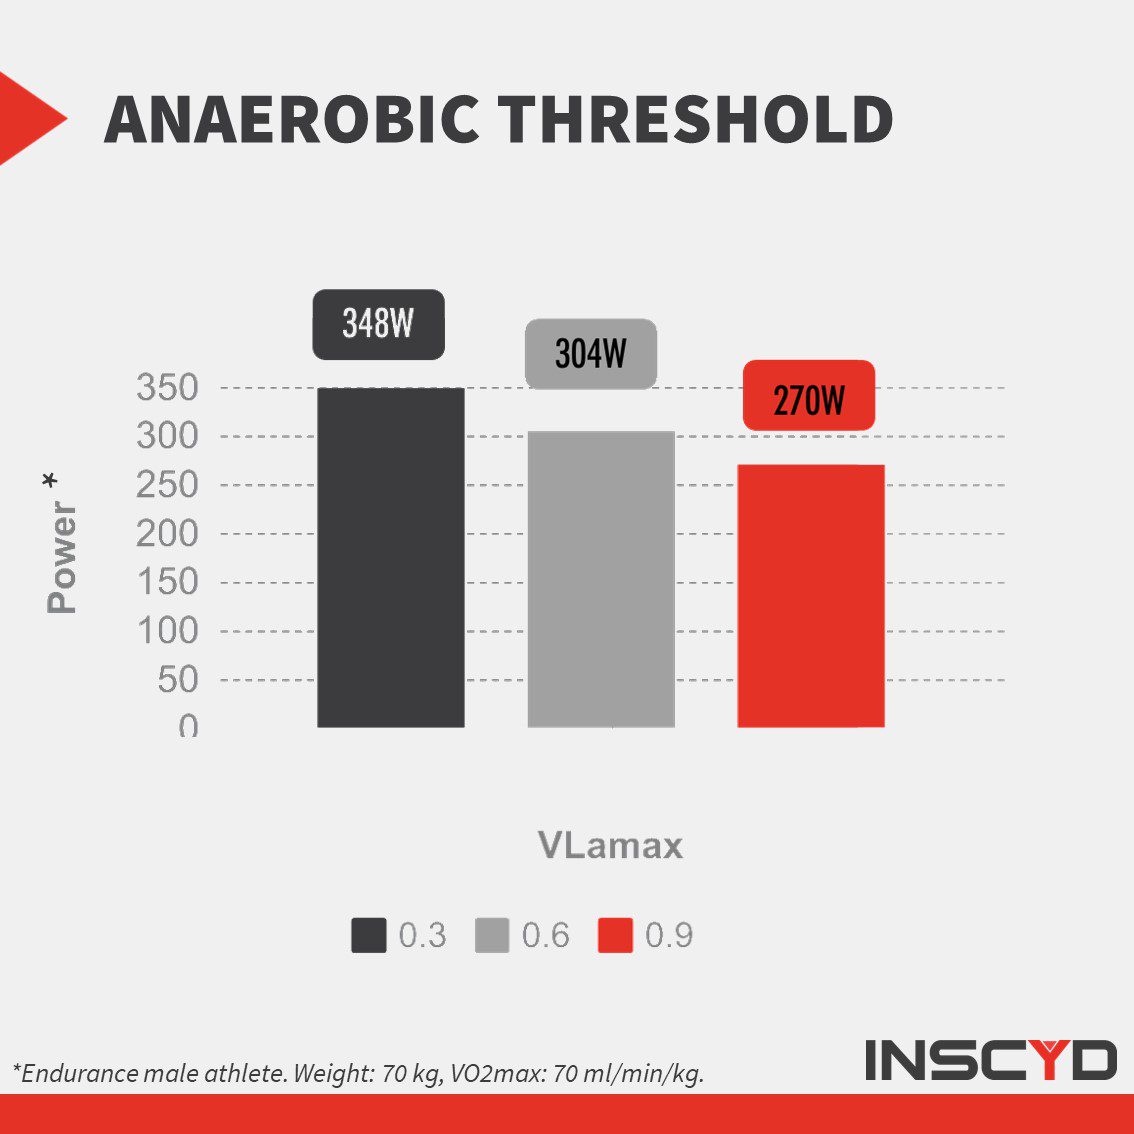 How anaerobic threshold depends on VLamax - INSCYD